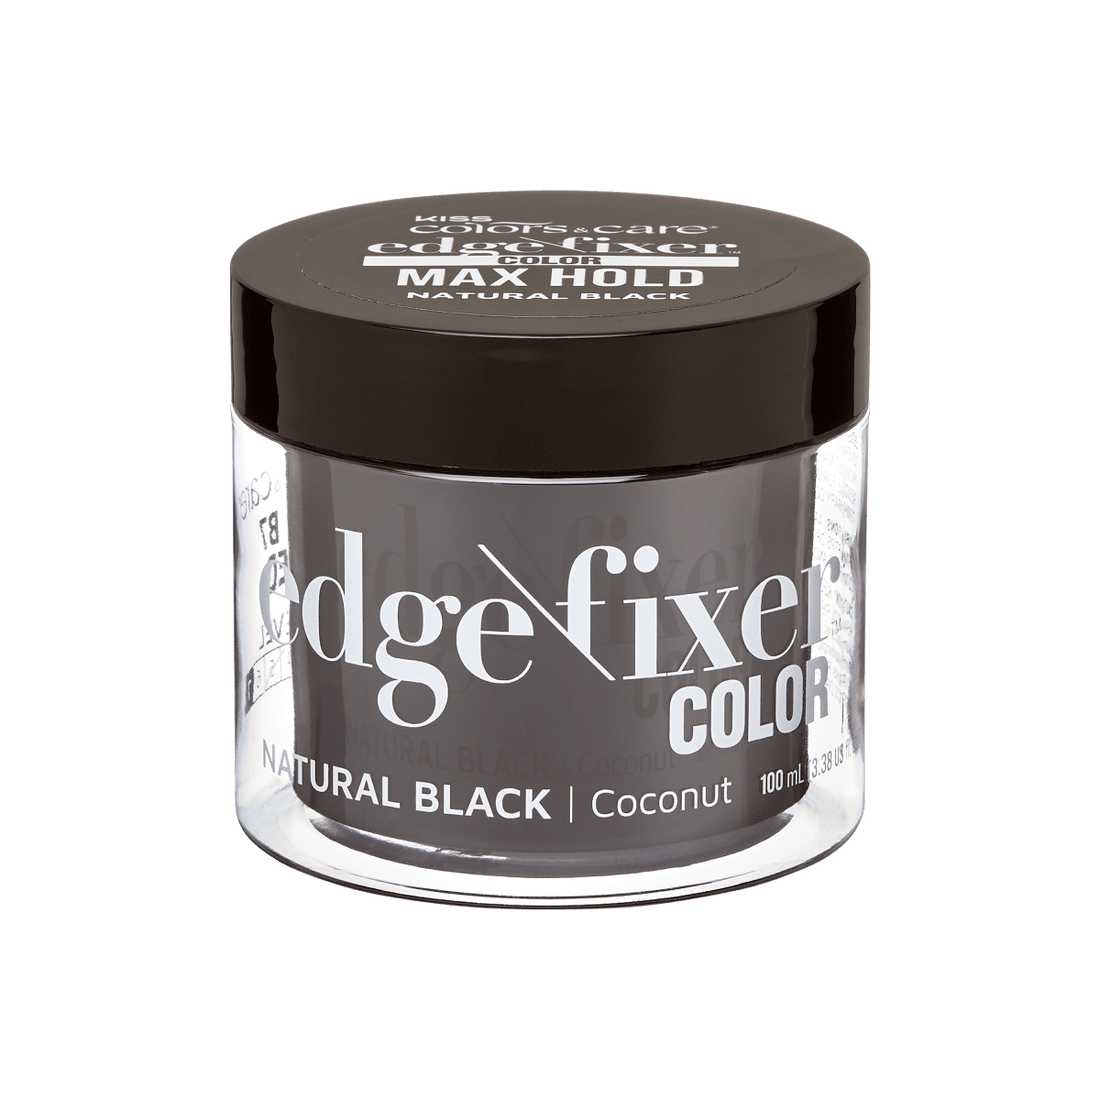 Edge Fixer Color 100mL - Natural Black